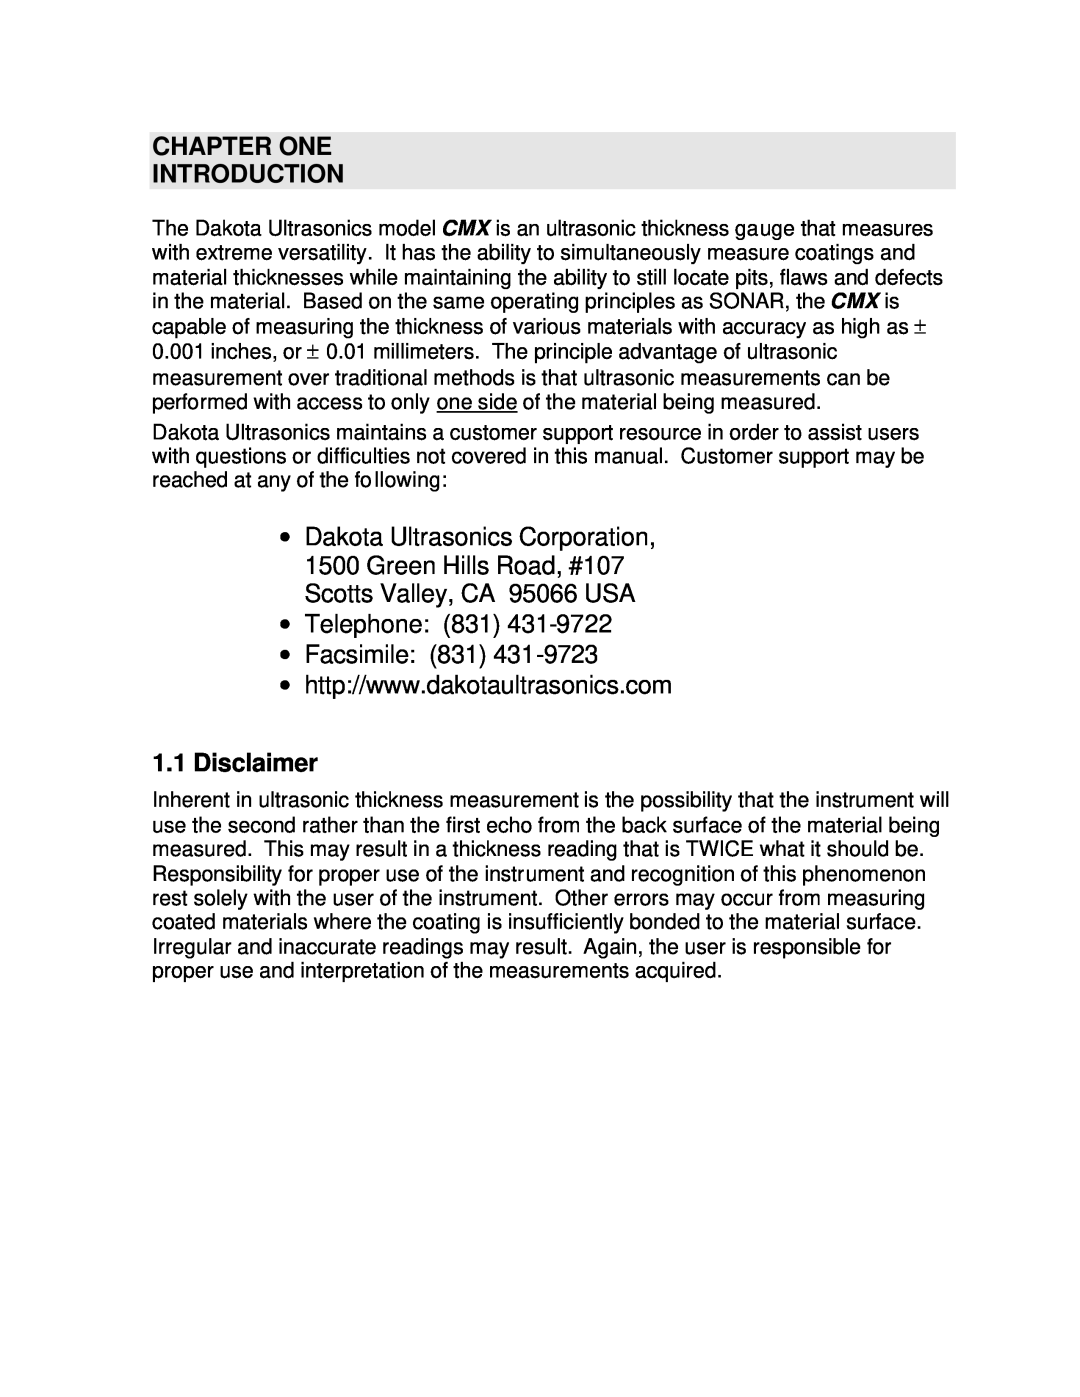 Dakota Digital CMX operation manual Chapter One Introduction, Disclaimer, ∙ Telephone 831 ∙ Facsimile 